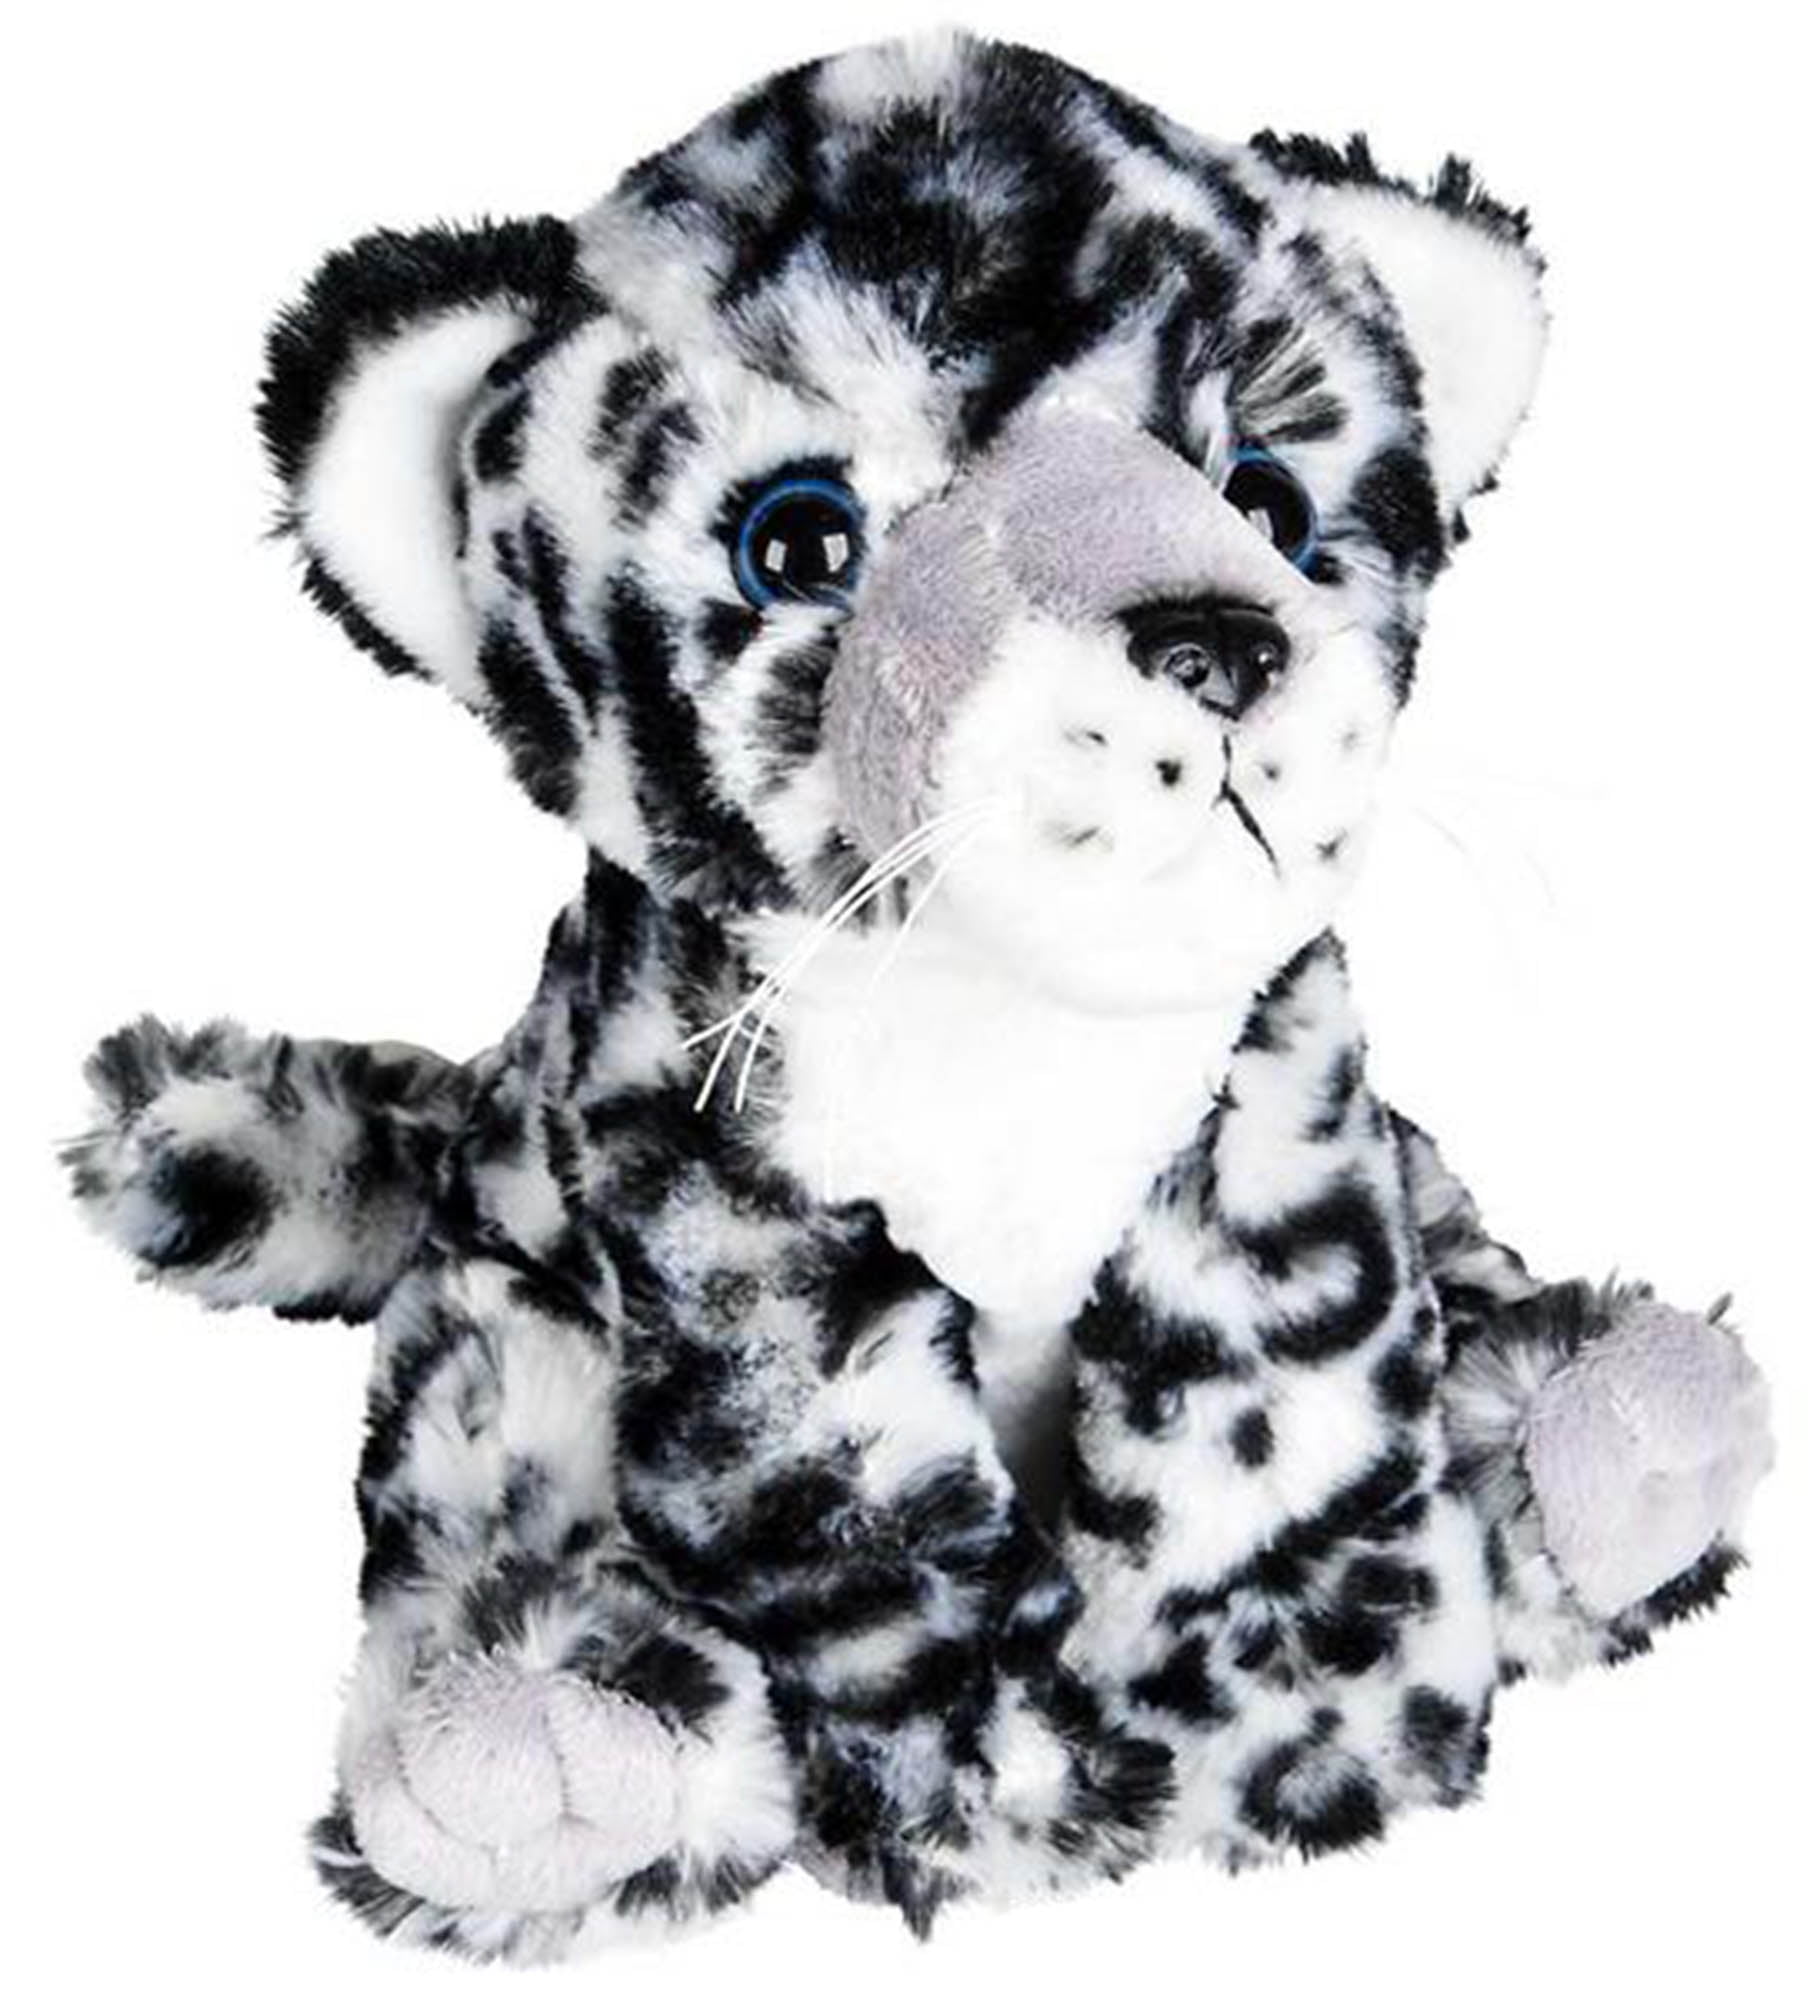 snow leopard stuffed animal